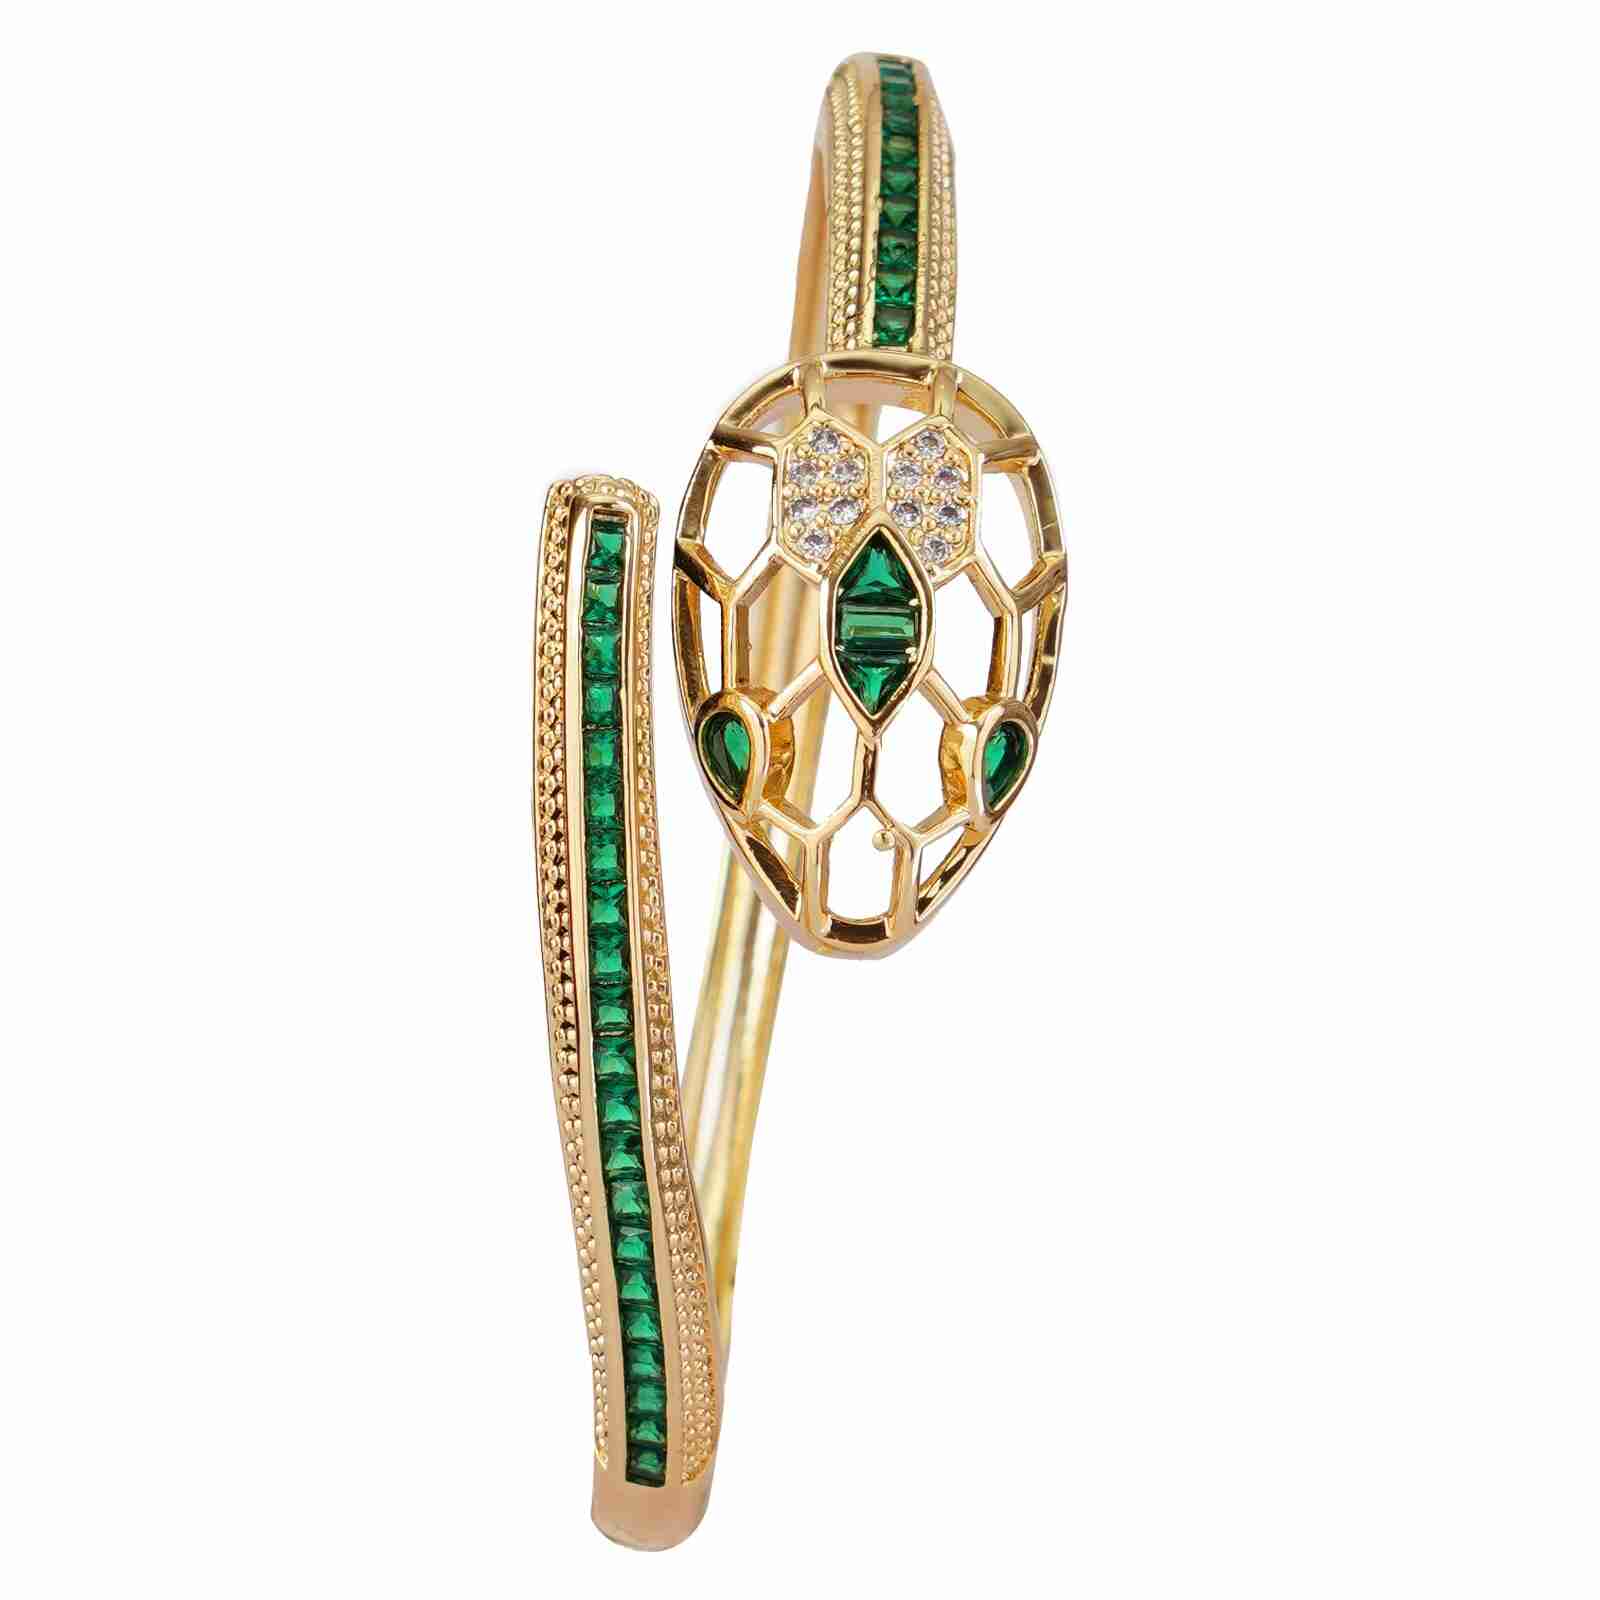 Bulgari | Gold, Coral and Ruby 'Serpenti' Bracelet-Watch 寶格麗 黃金鑲珊瑚及紅寶石「 Serpenti」手鏈腕錶 | Magnificent Jewels | 2021 | Sotheby's